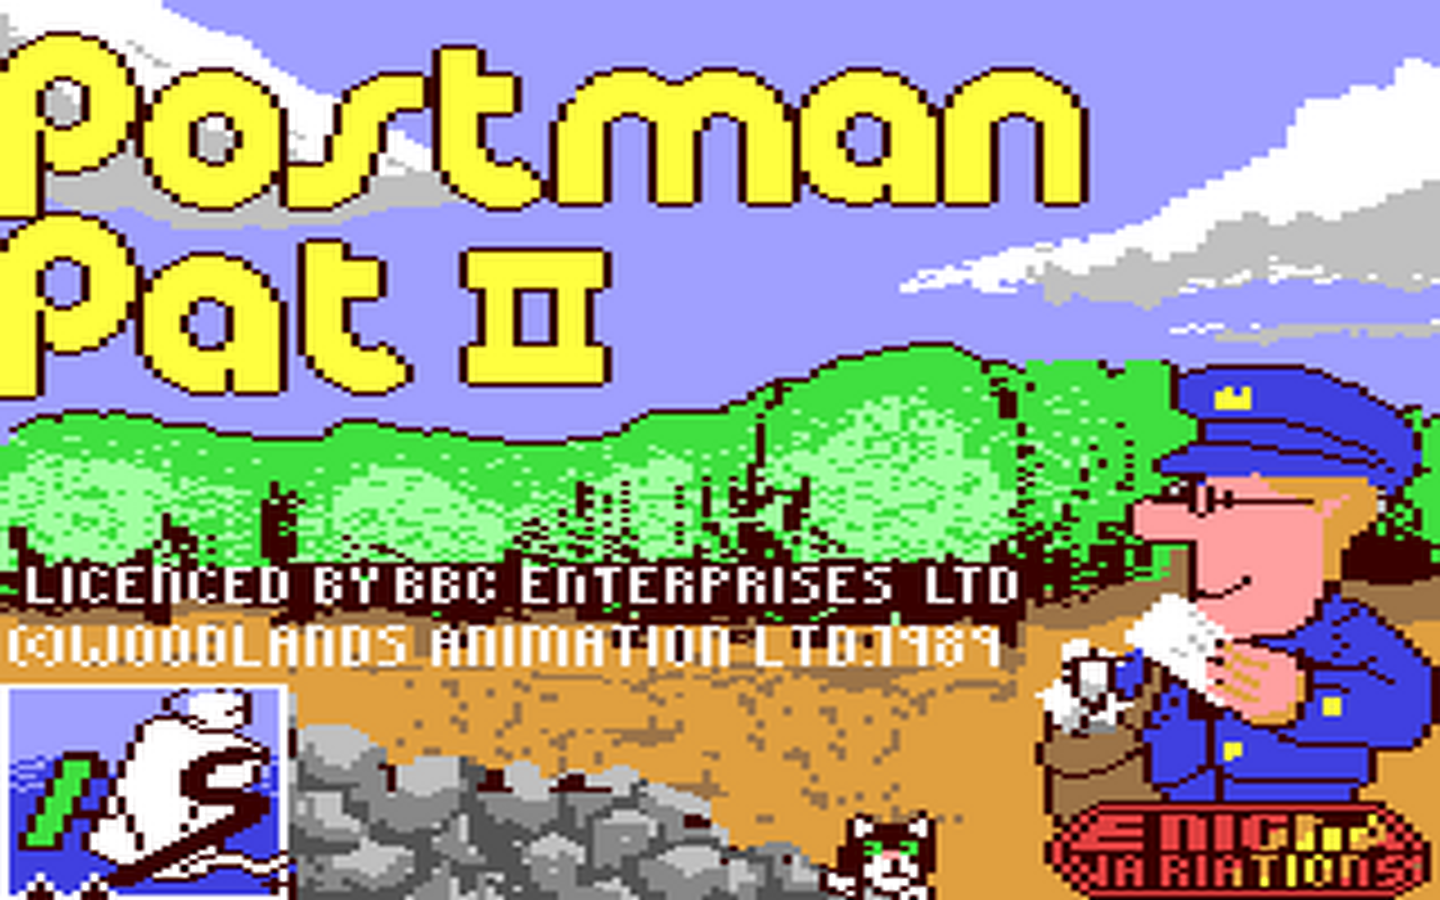 C64 GameBase Postman_Pat_II Alternative_Software 1989